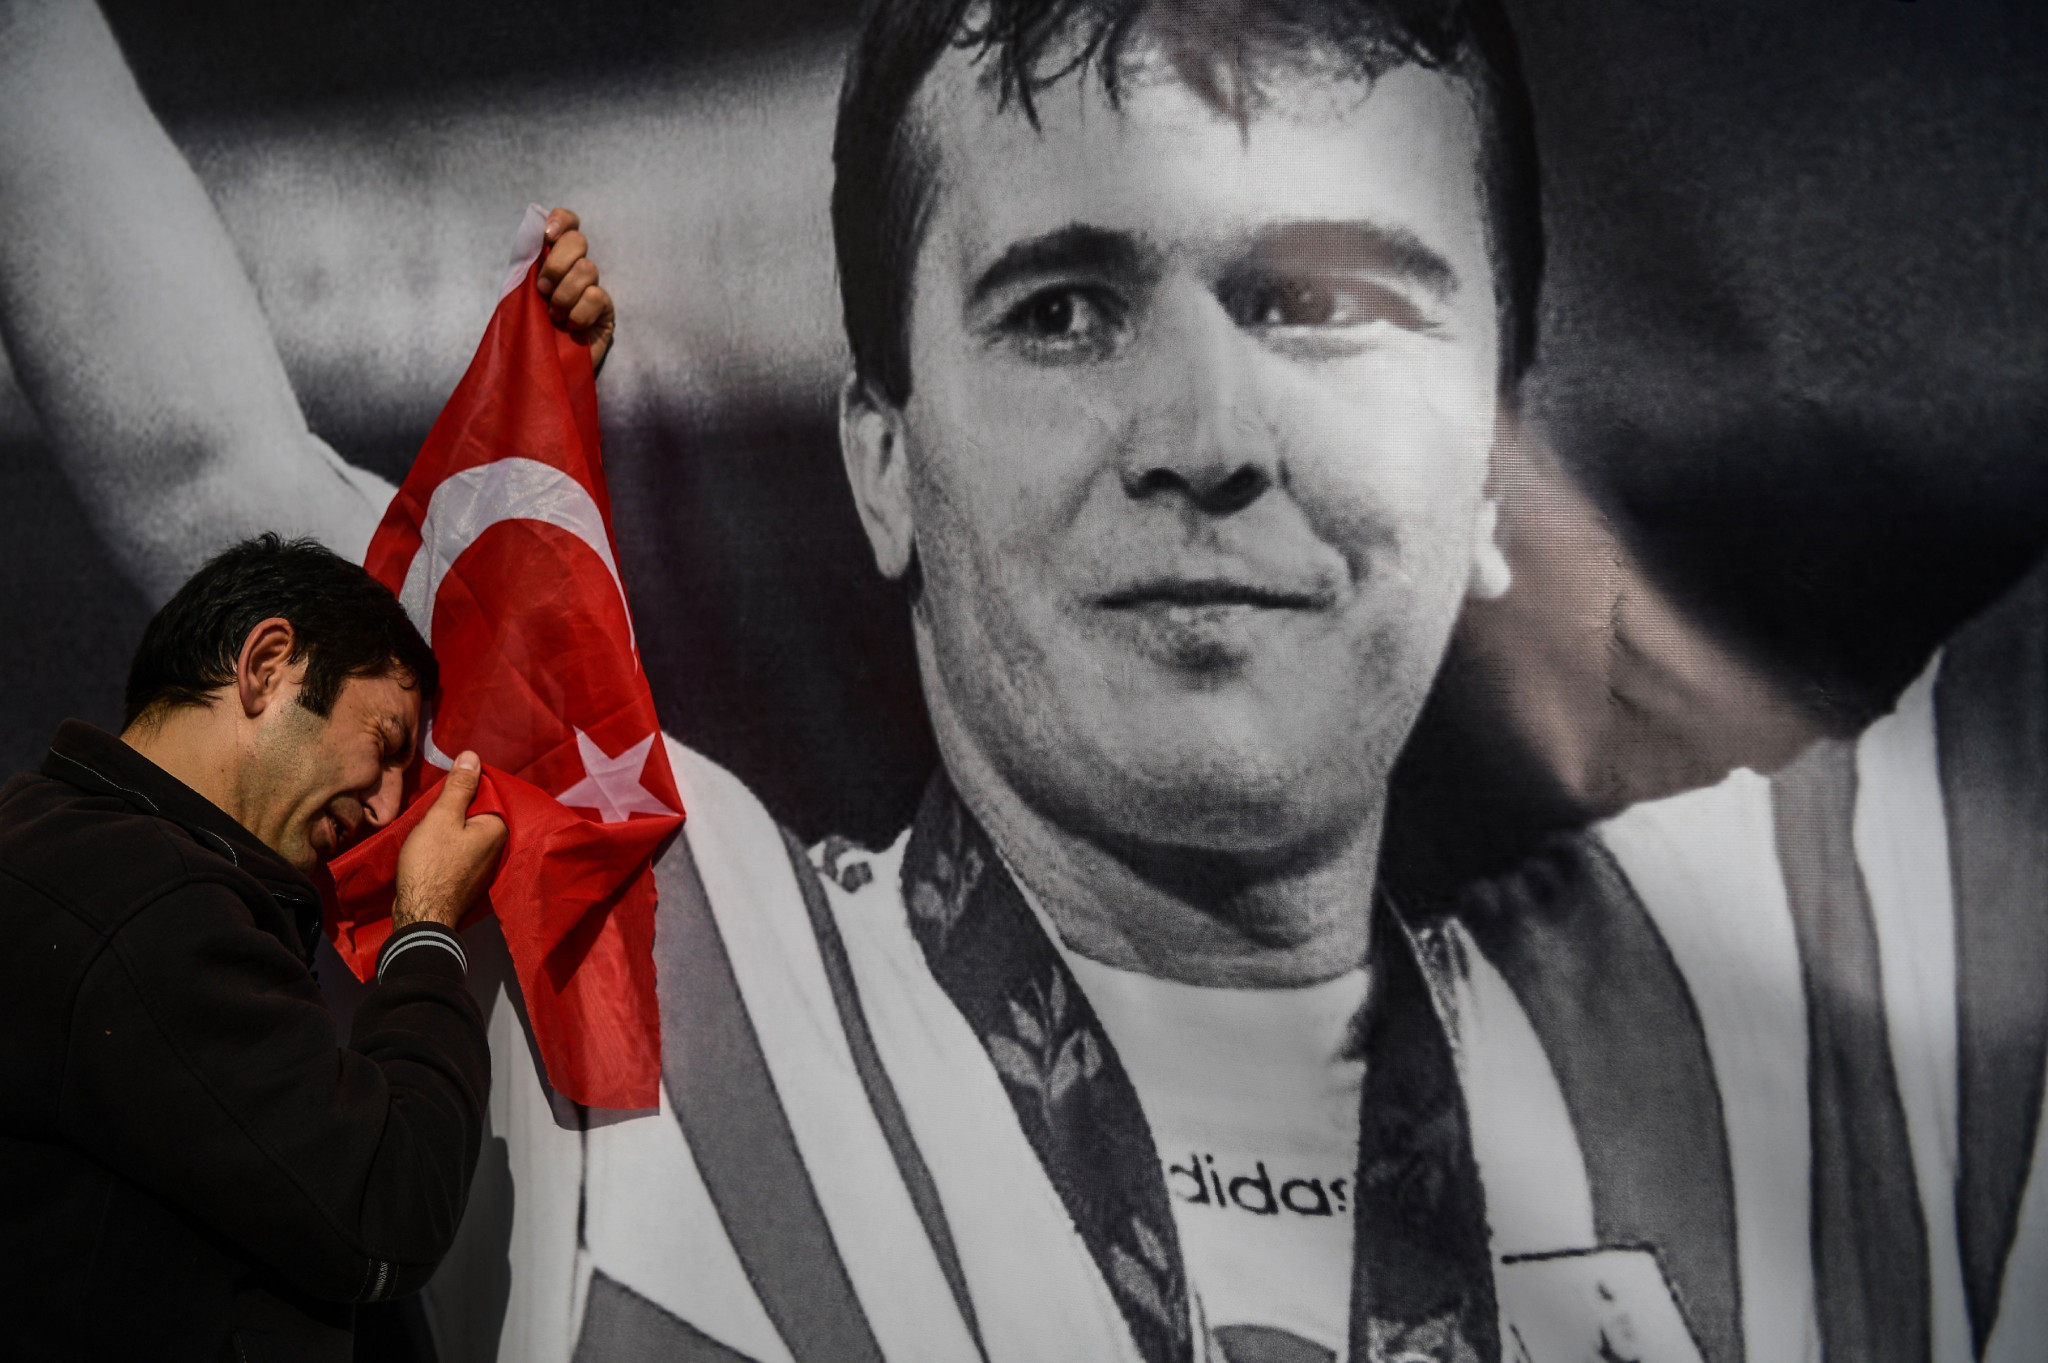 Weightlifting legend Süleymanoğlu exhumed for paternity test